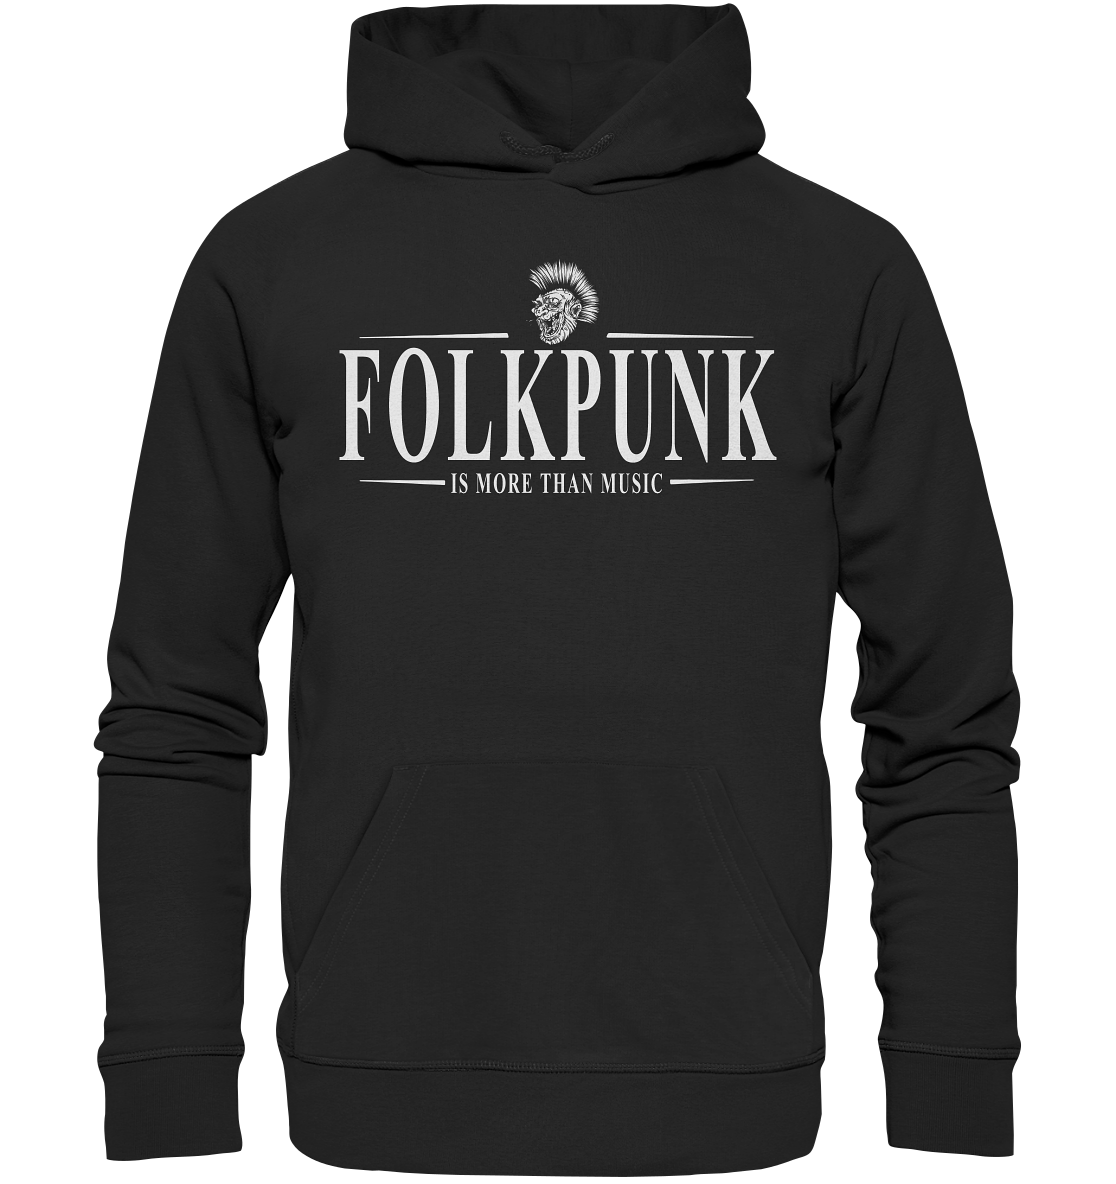 Folkpunk "Is More Than Music" - Organic Hoodie